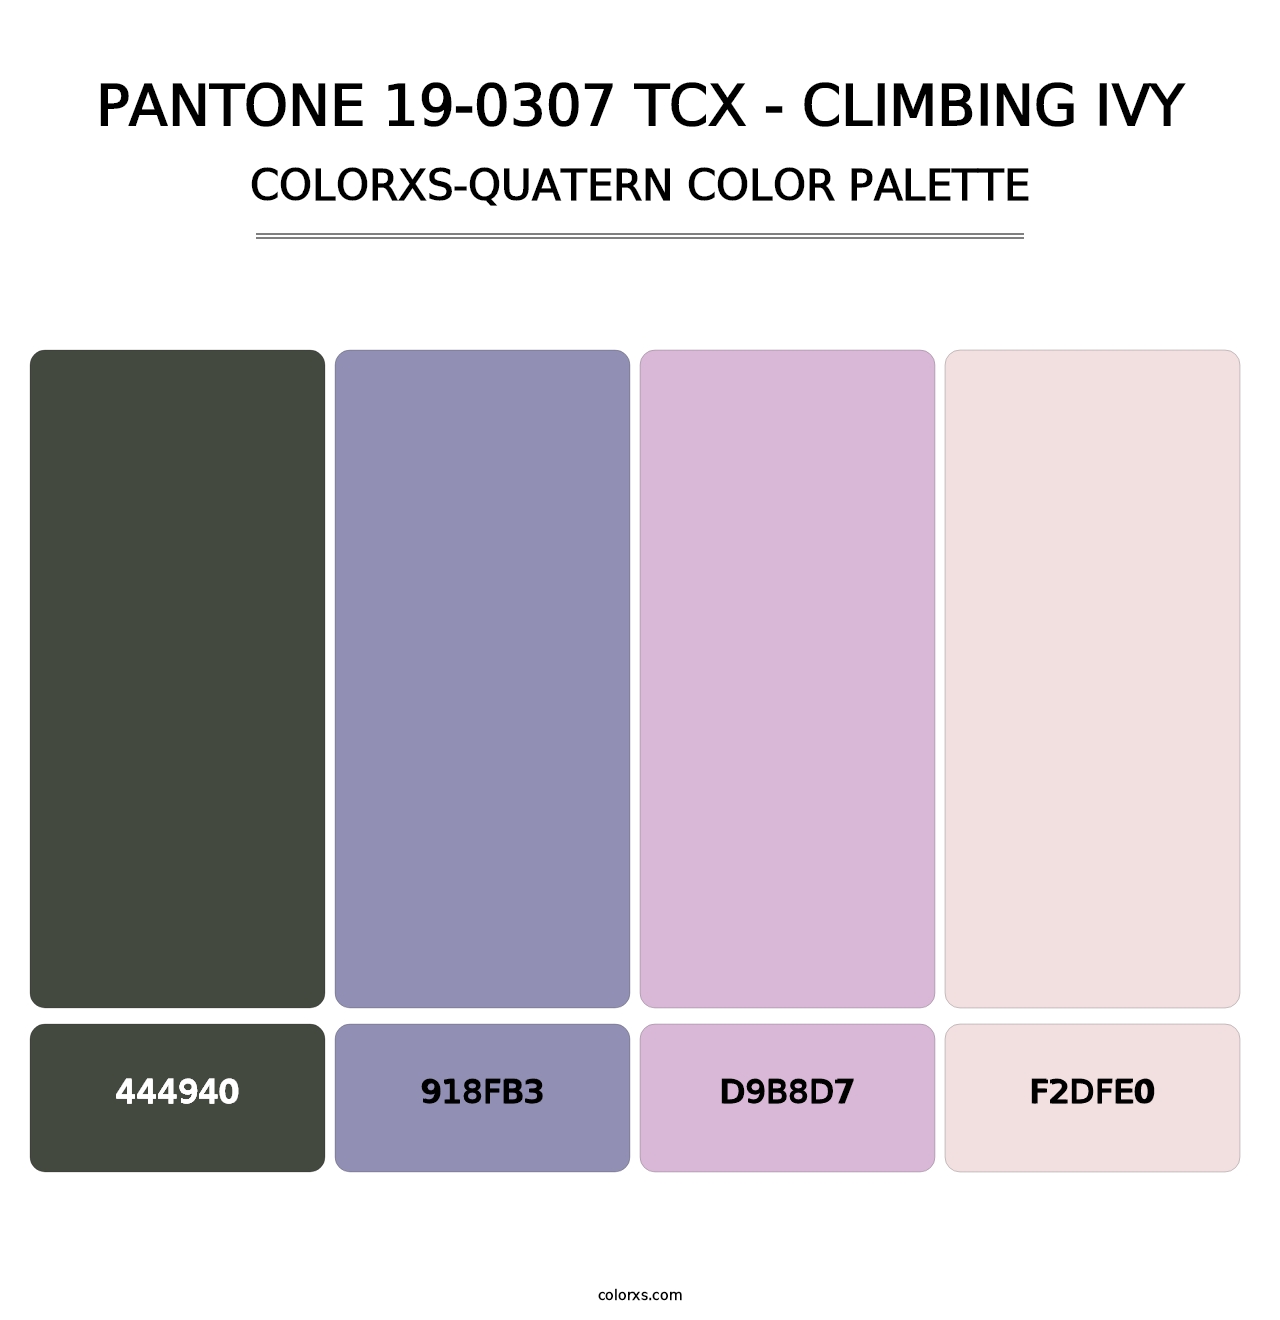 PANTONE 19-0307 TCX - Climbing Ivy - Colorxs Quatern Palette